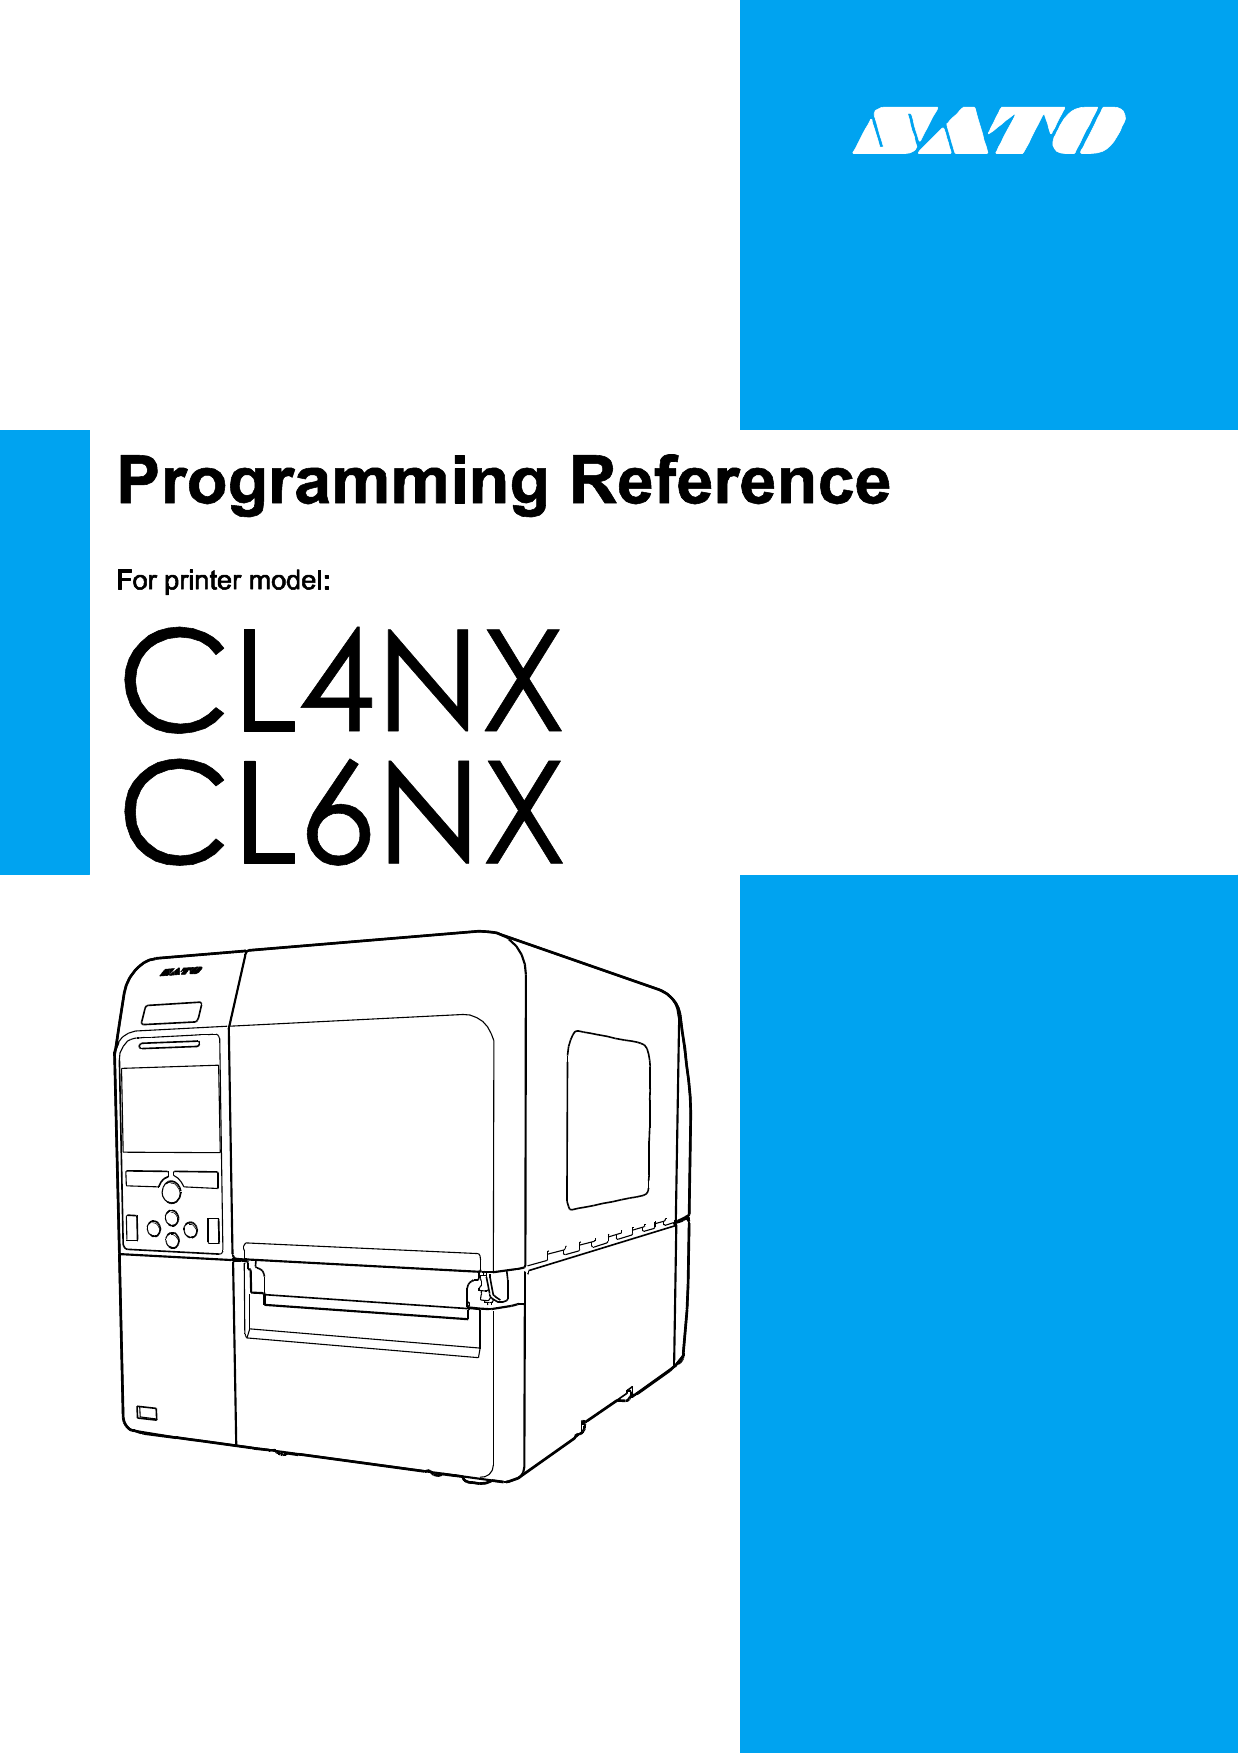 Cl4nx Cl6nx Programming Reference Manualzz